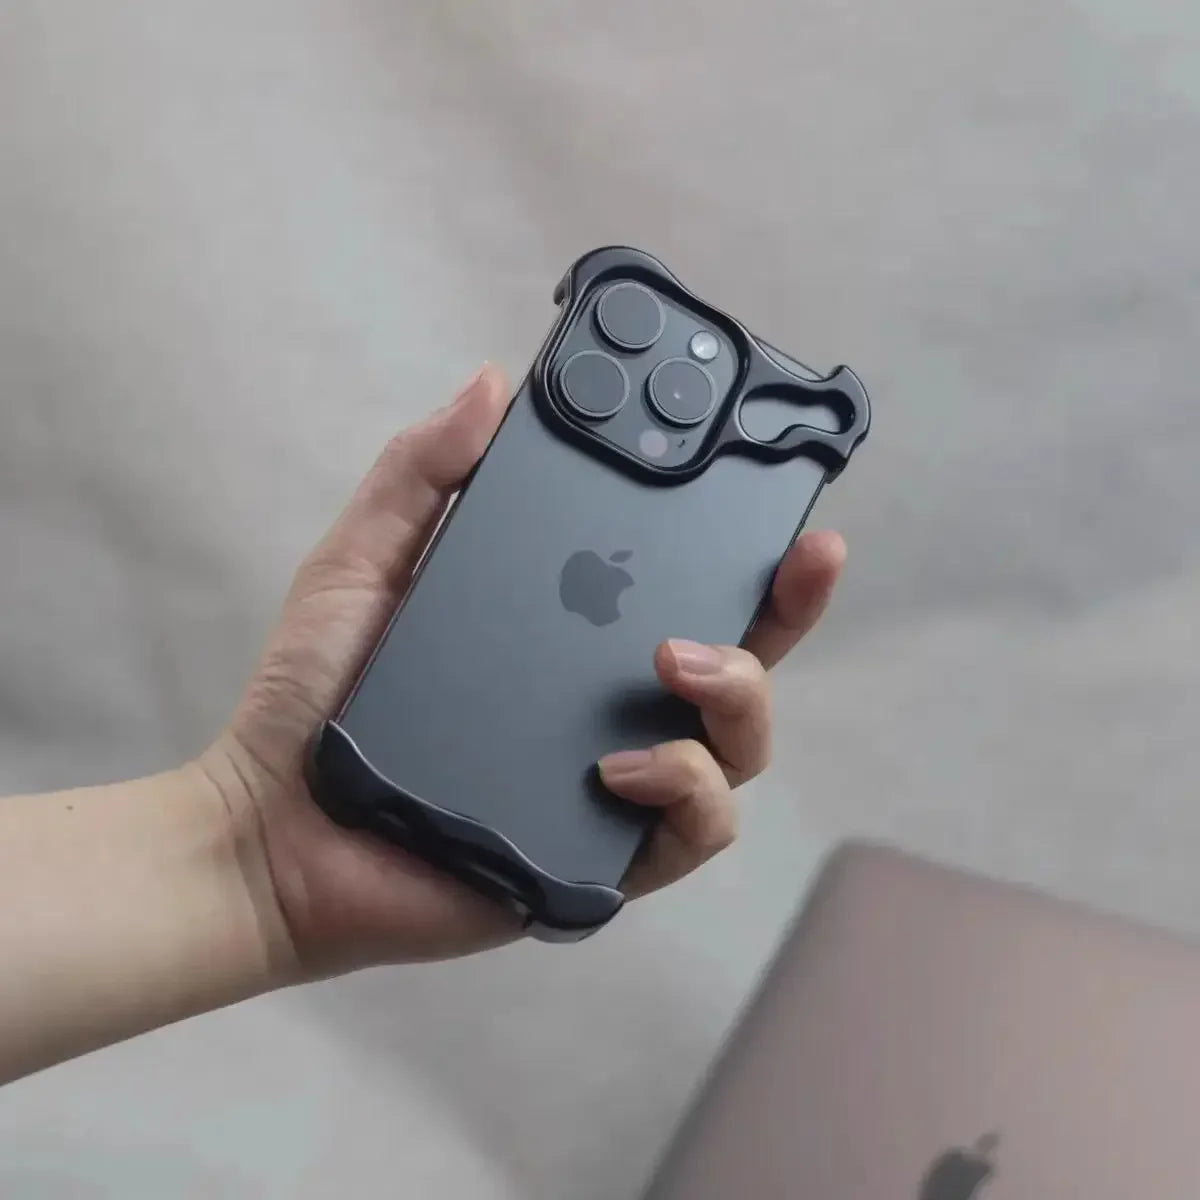 Aluminum Alloy Bumper Case for iPhone 13-15 Pro Max & Plus with Lens Film Shield